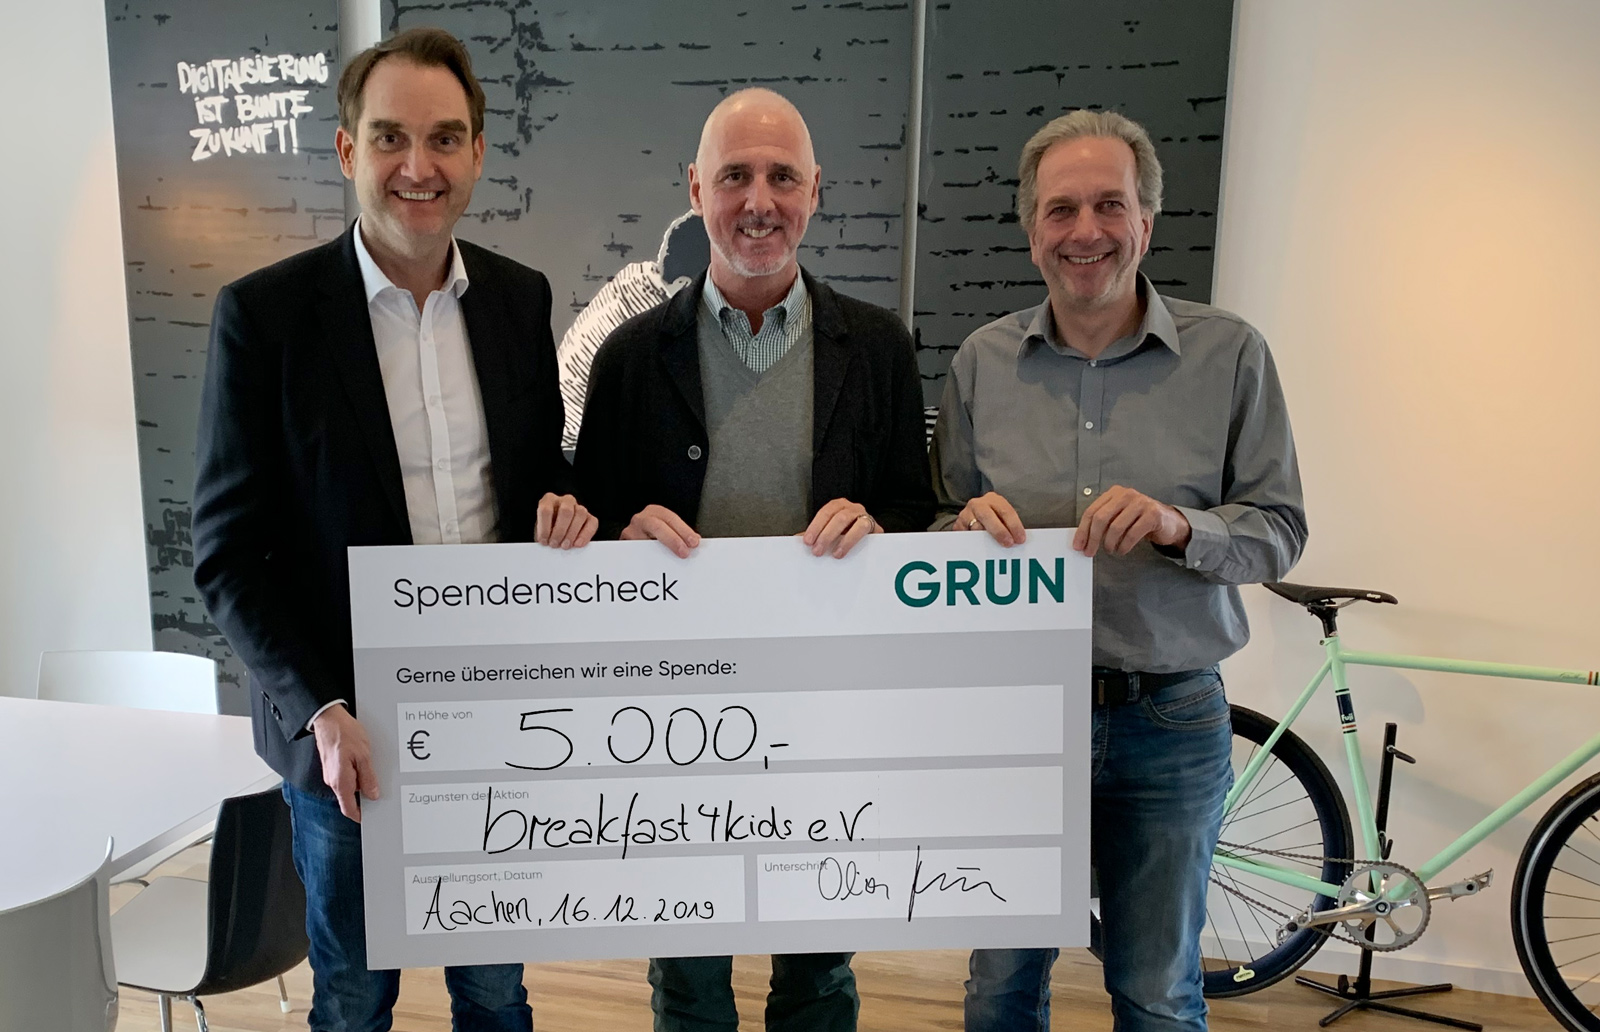 GRÜN spendet 5.000 Euro für breakfast4kids e.V.